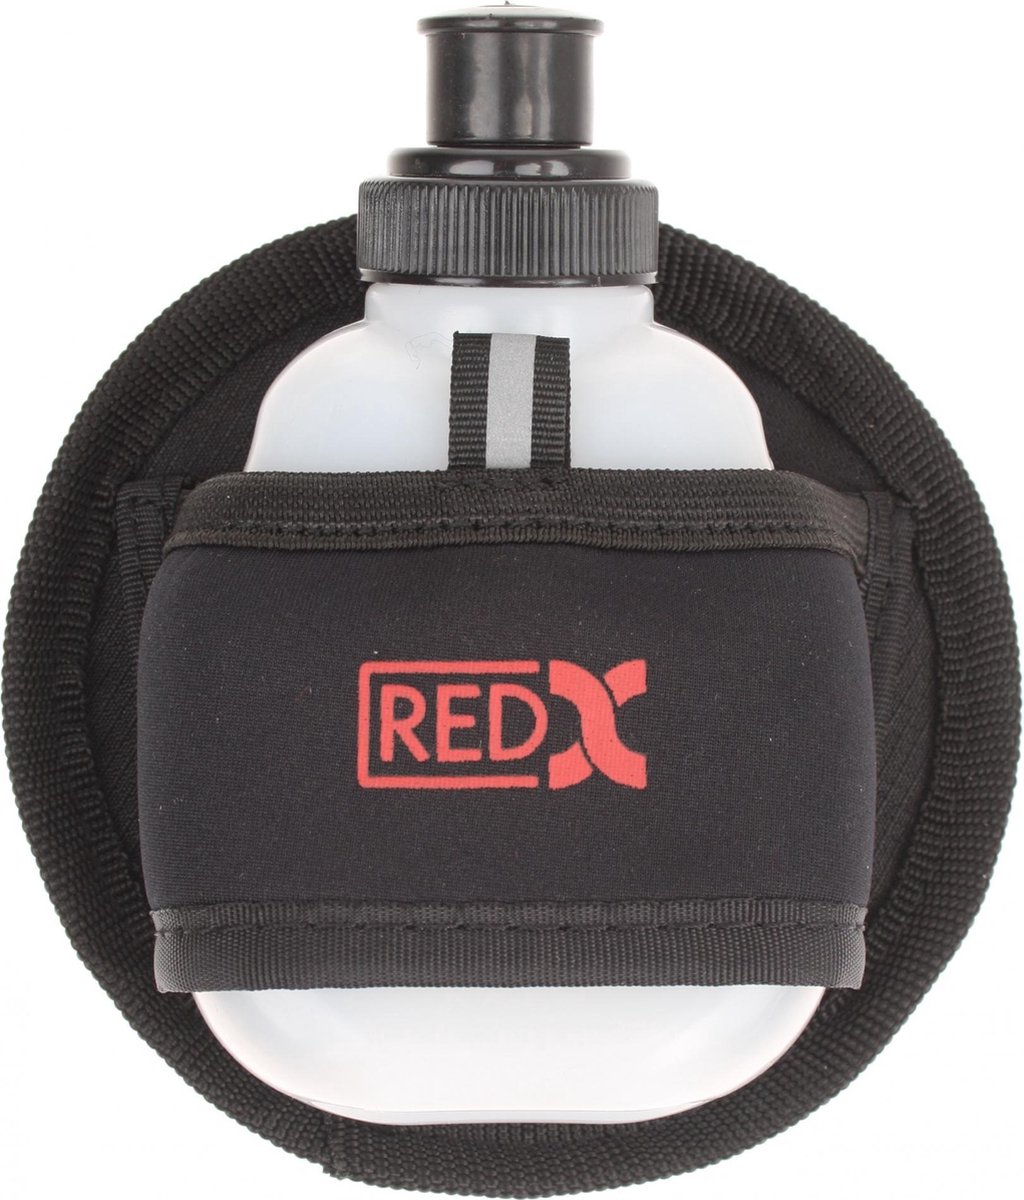 Red-x Bidonpocket Met Bidon 0,3 L